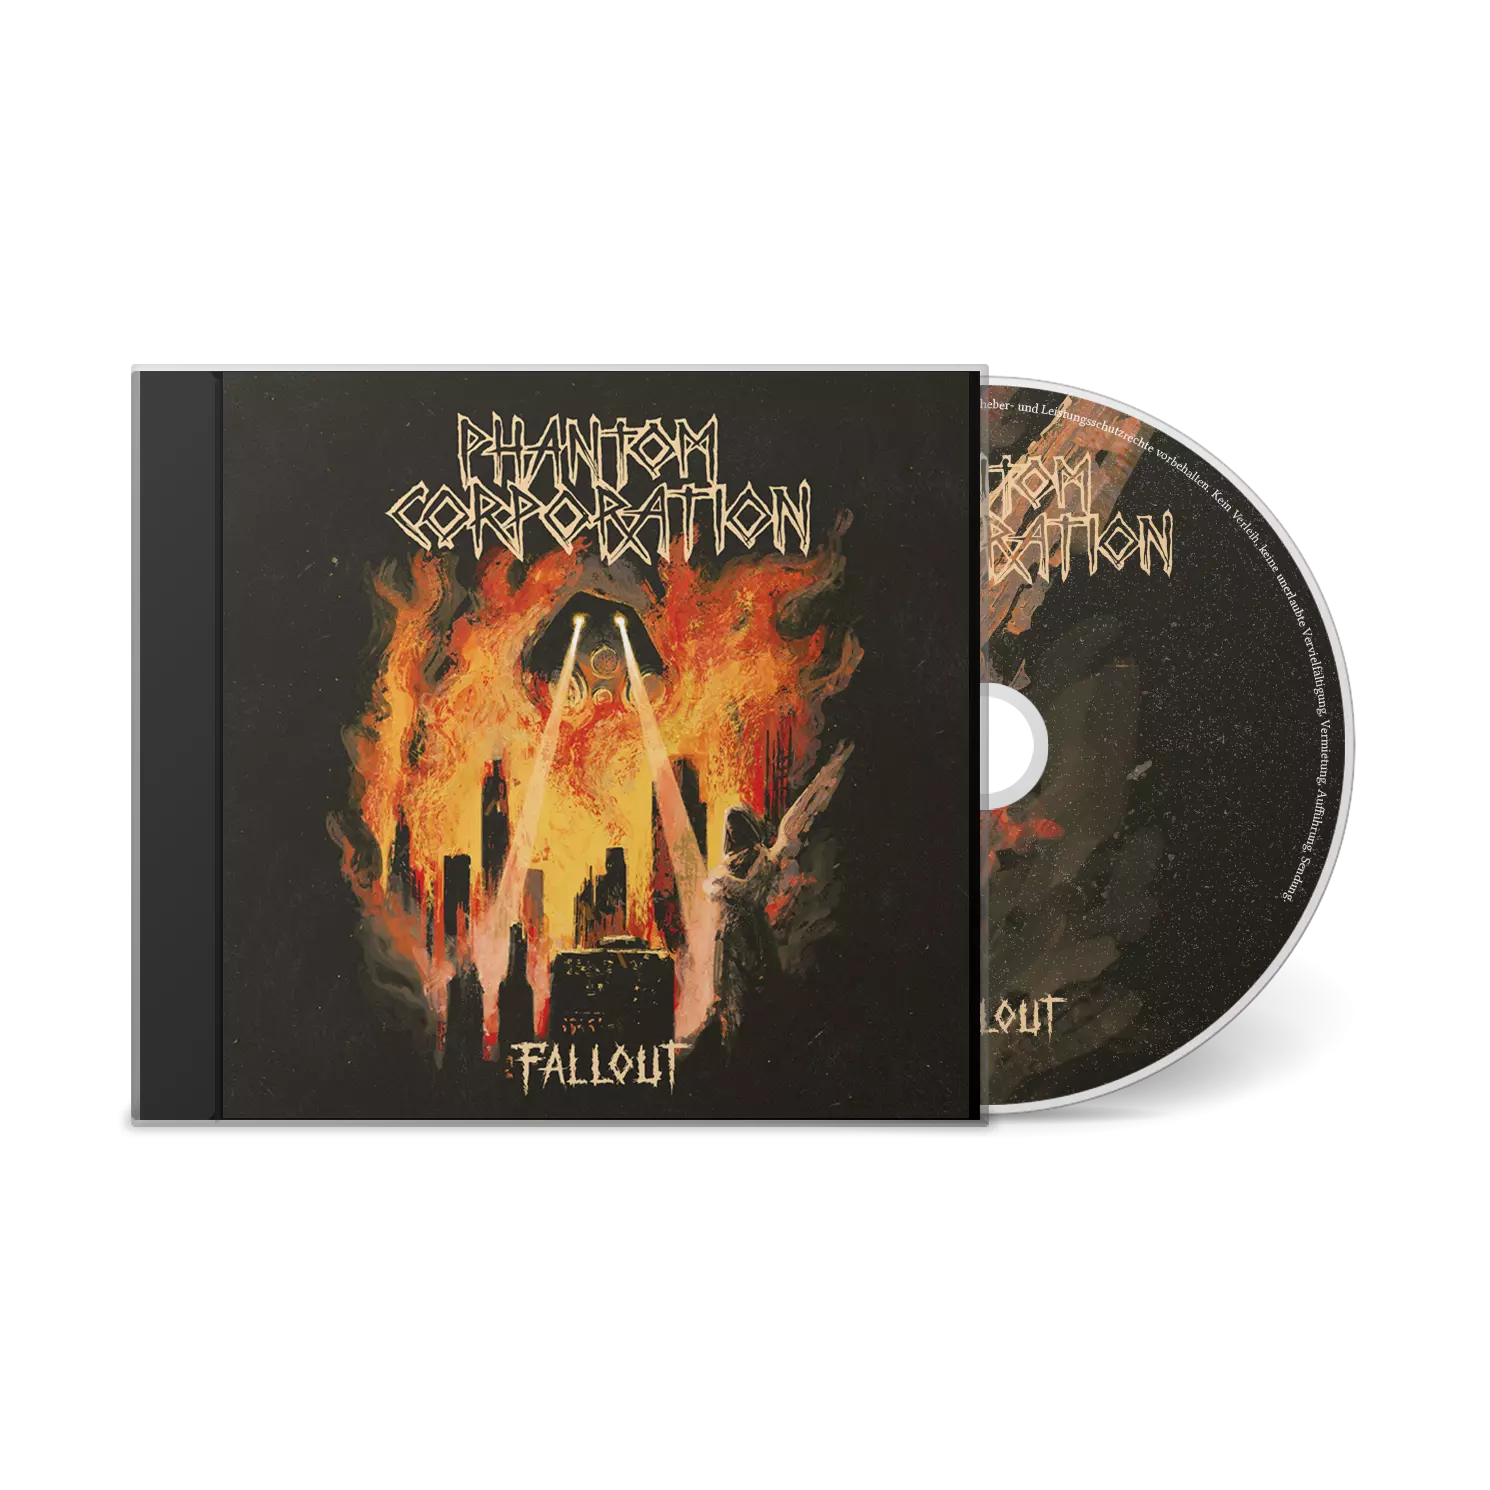 PHANTOM CORPORATION - Fallout [CD]